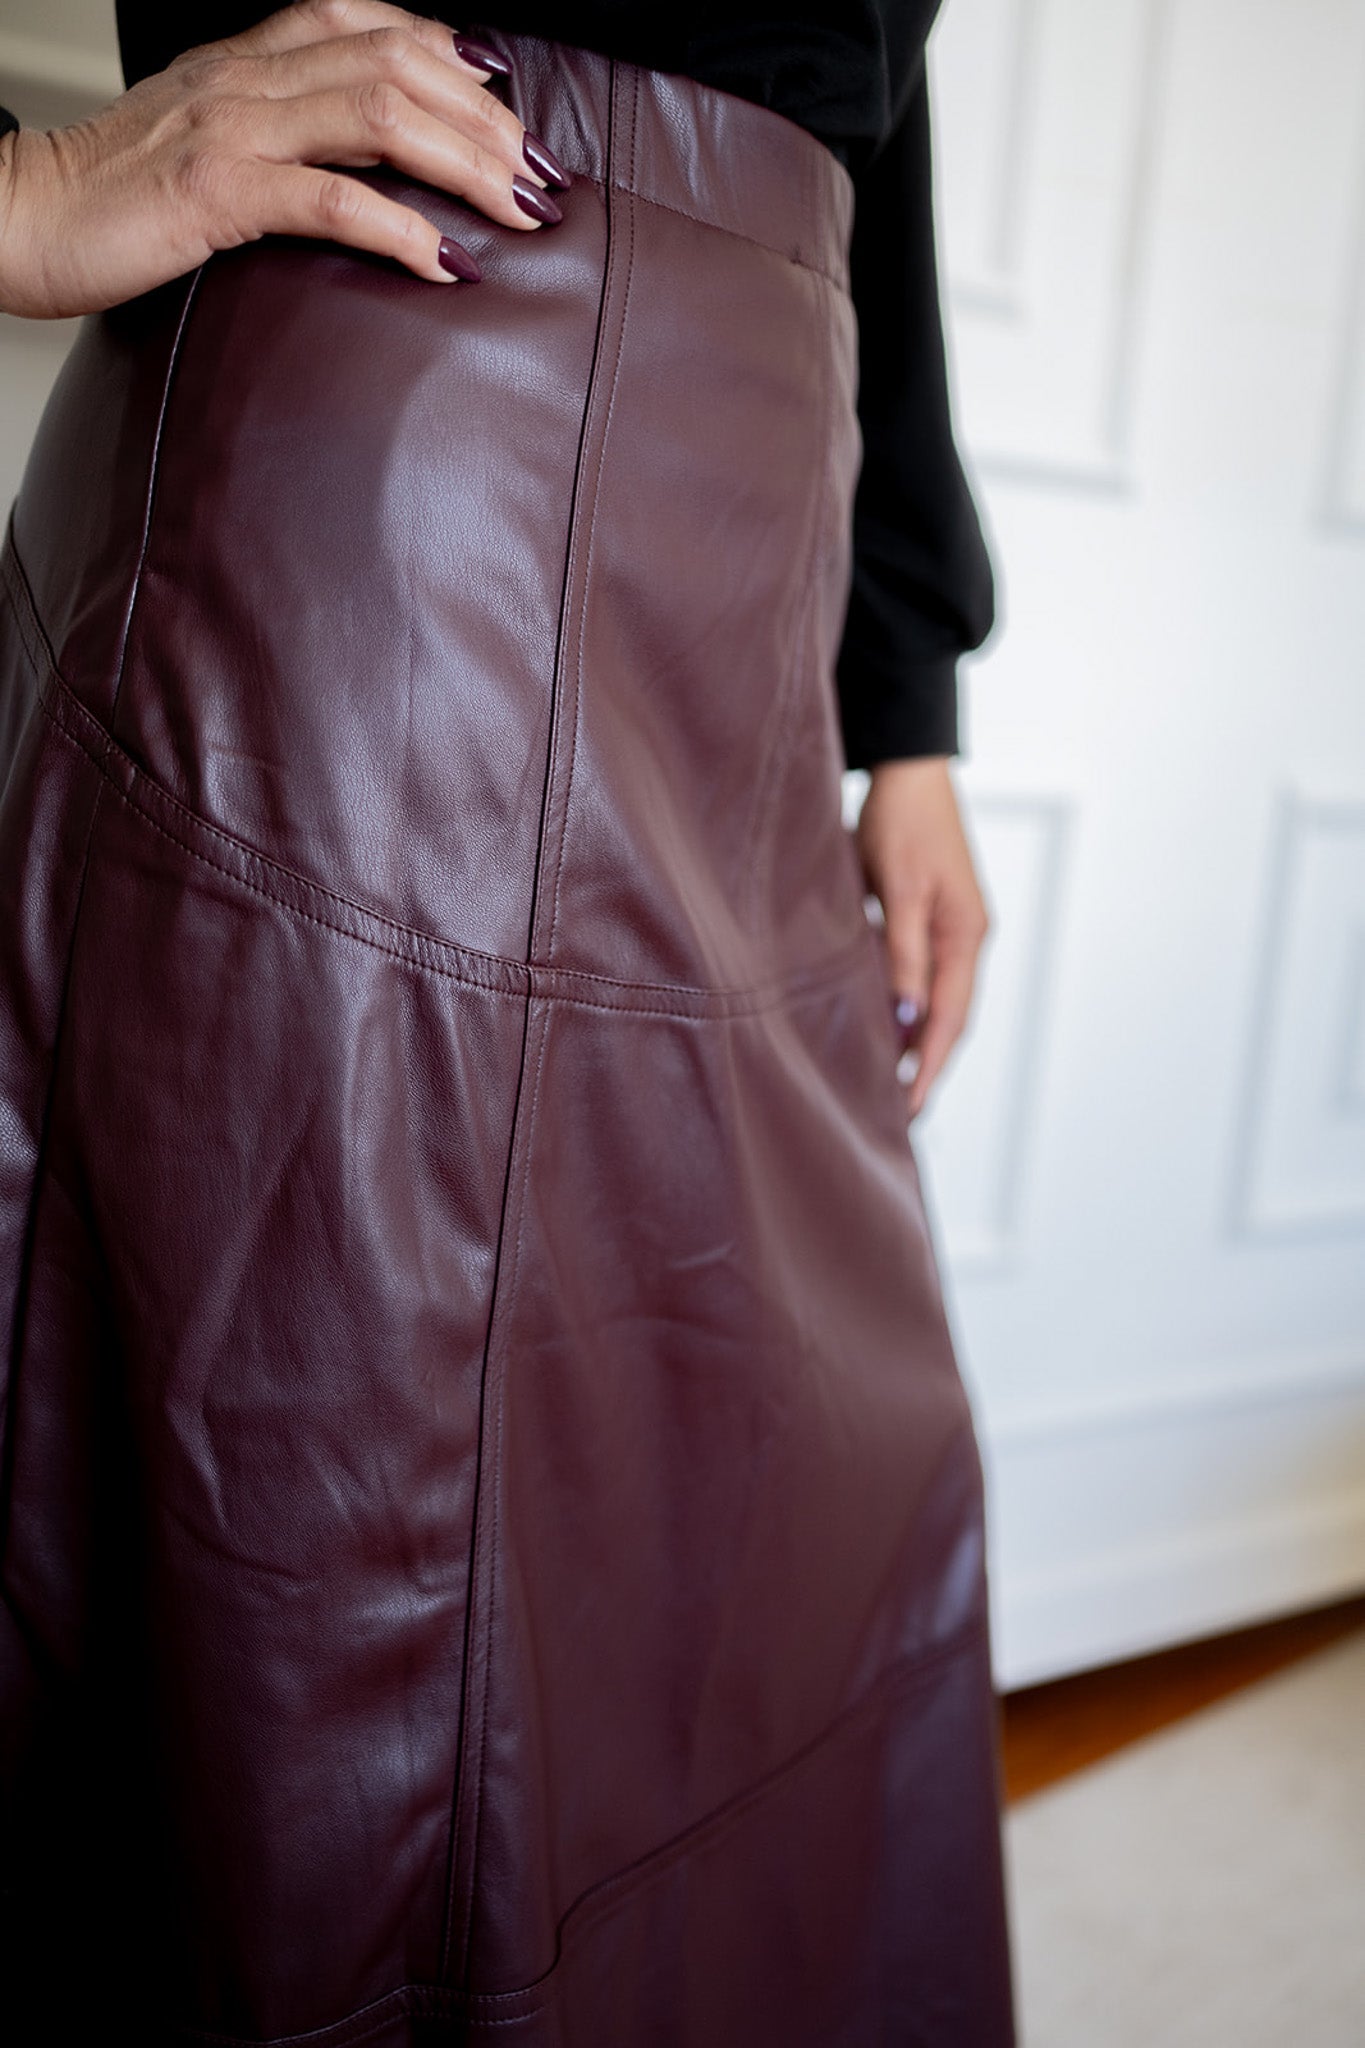 Primark Burgundy Faux Leather Croc Mini Skirt 8 | eBay